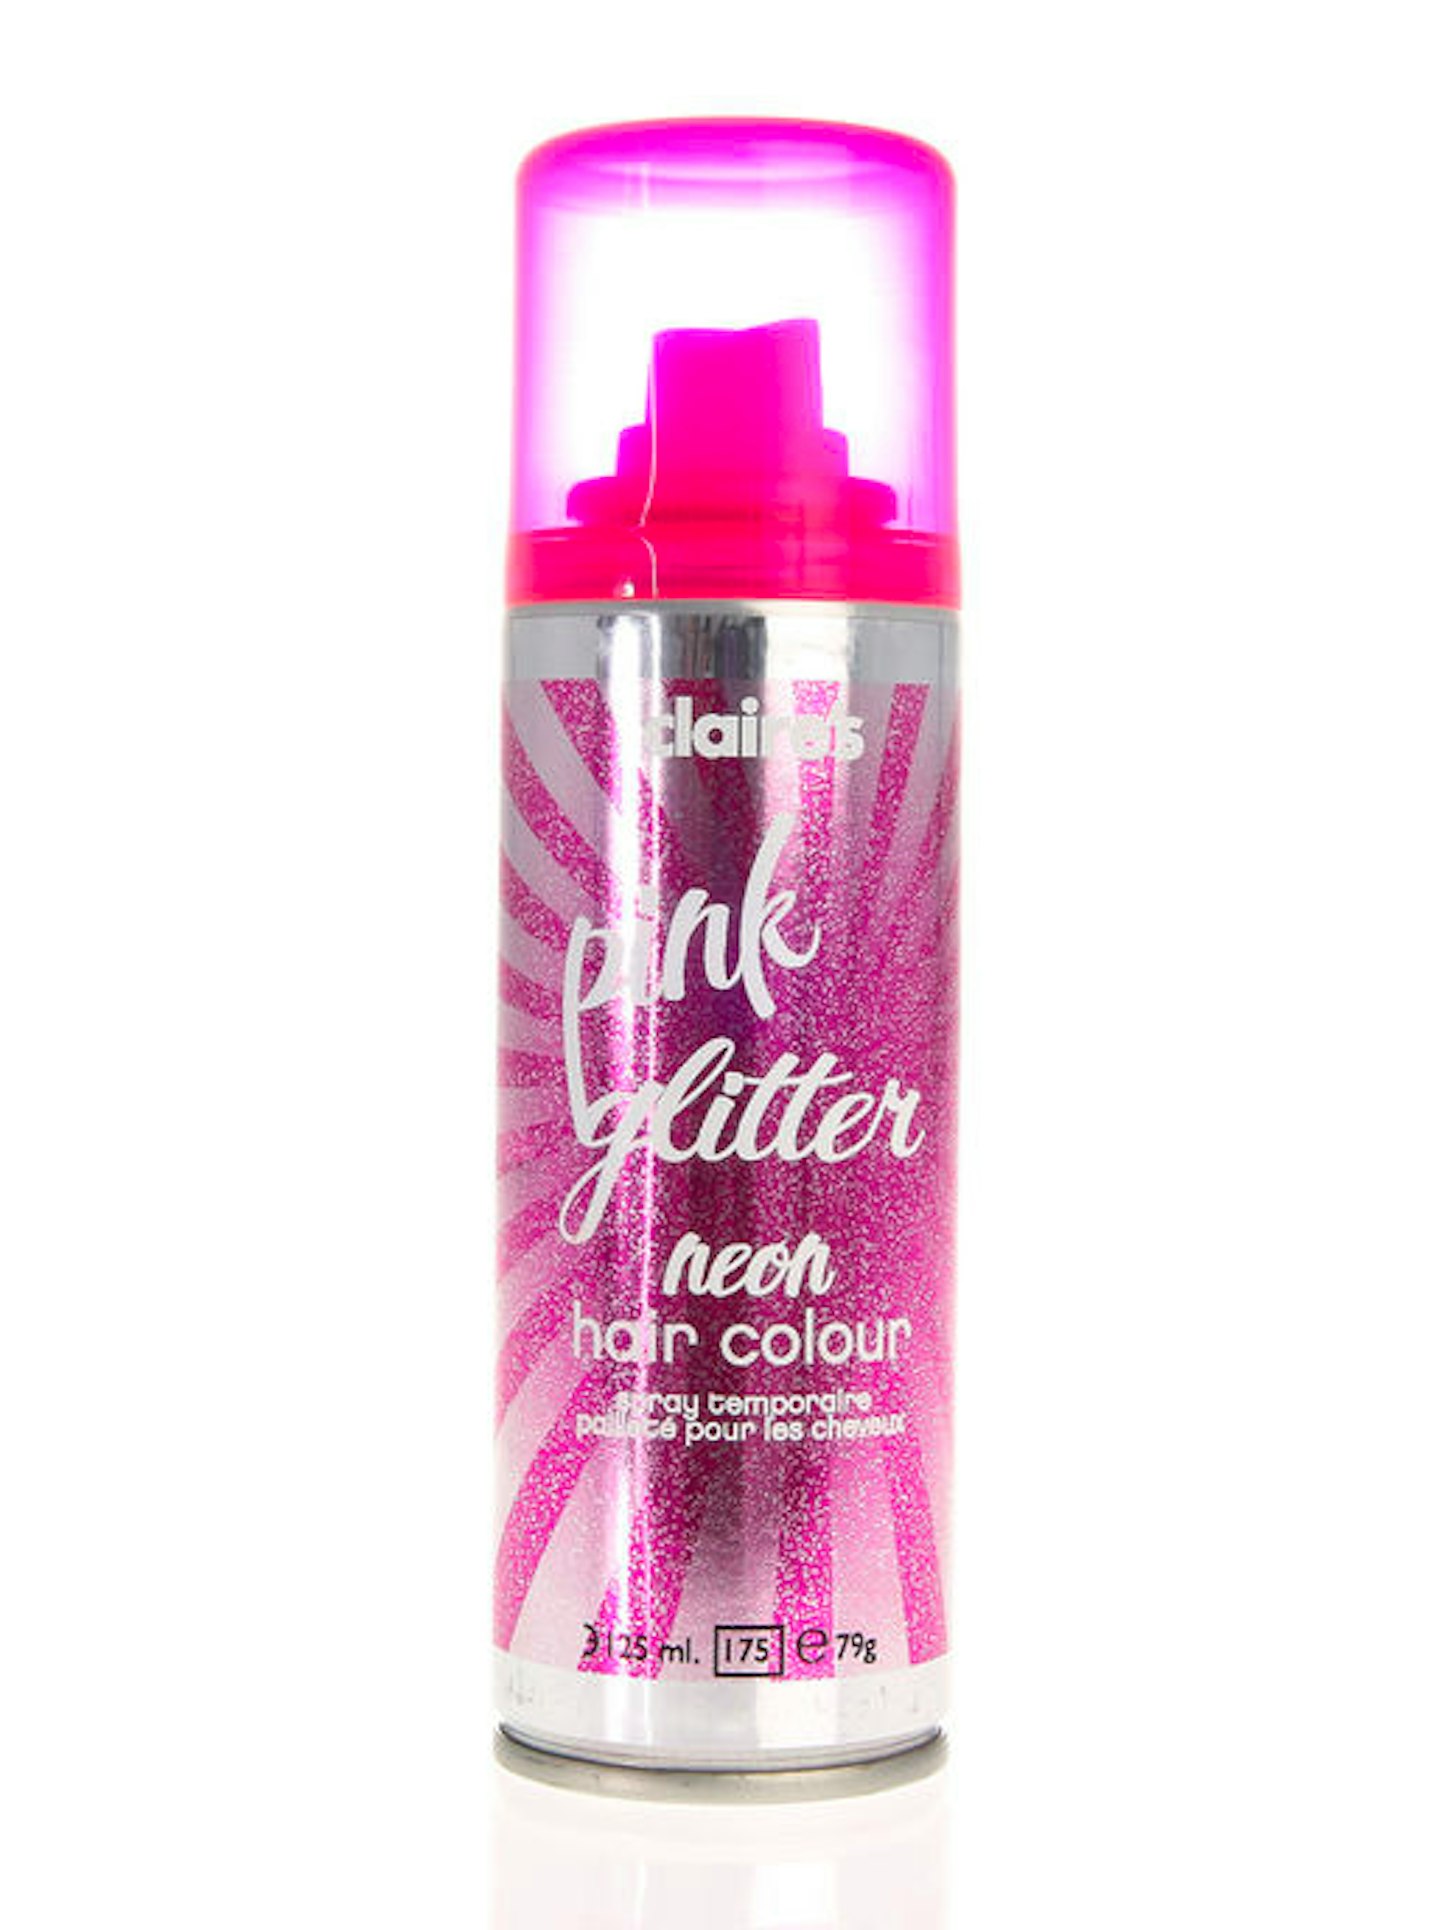 glitter-hairspray-claires-accessories